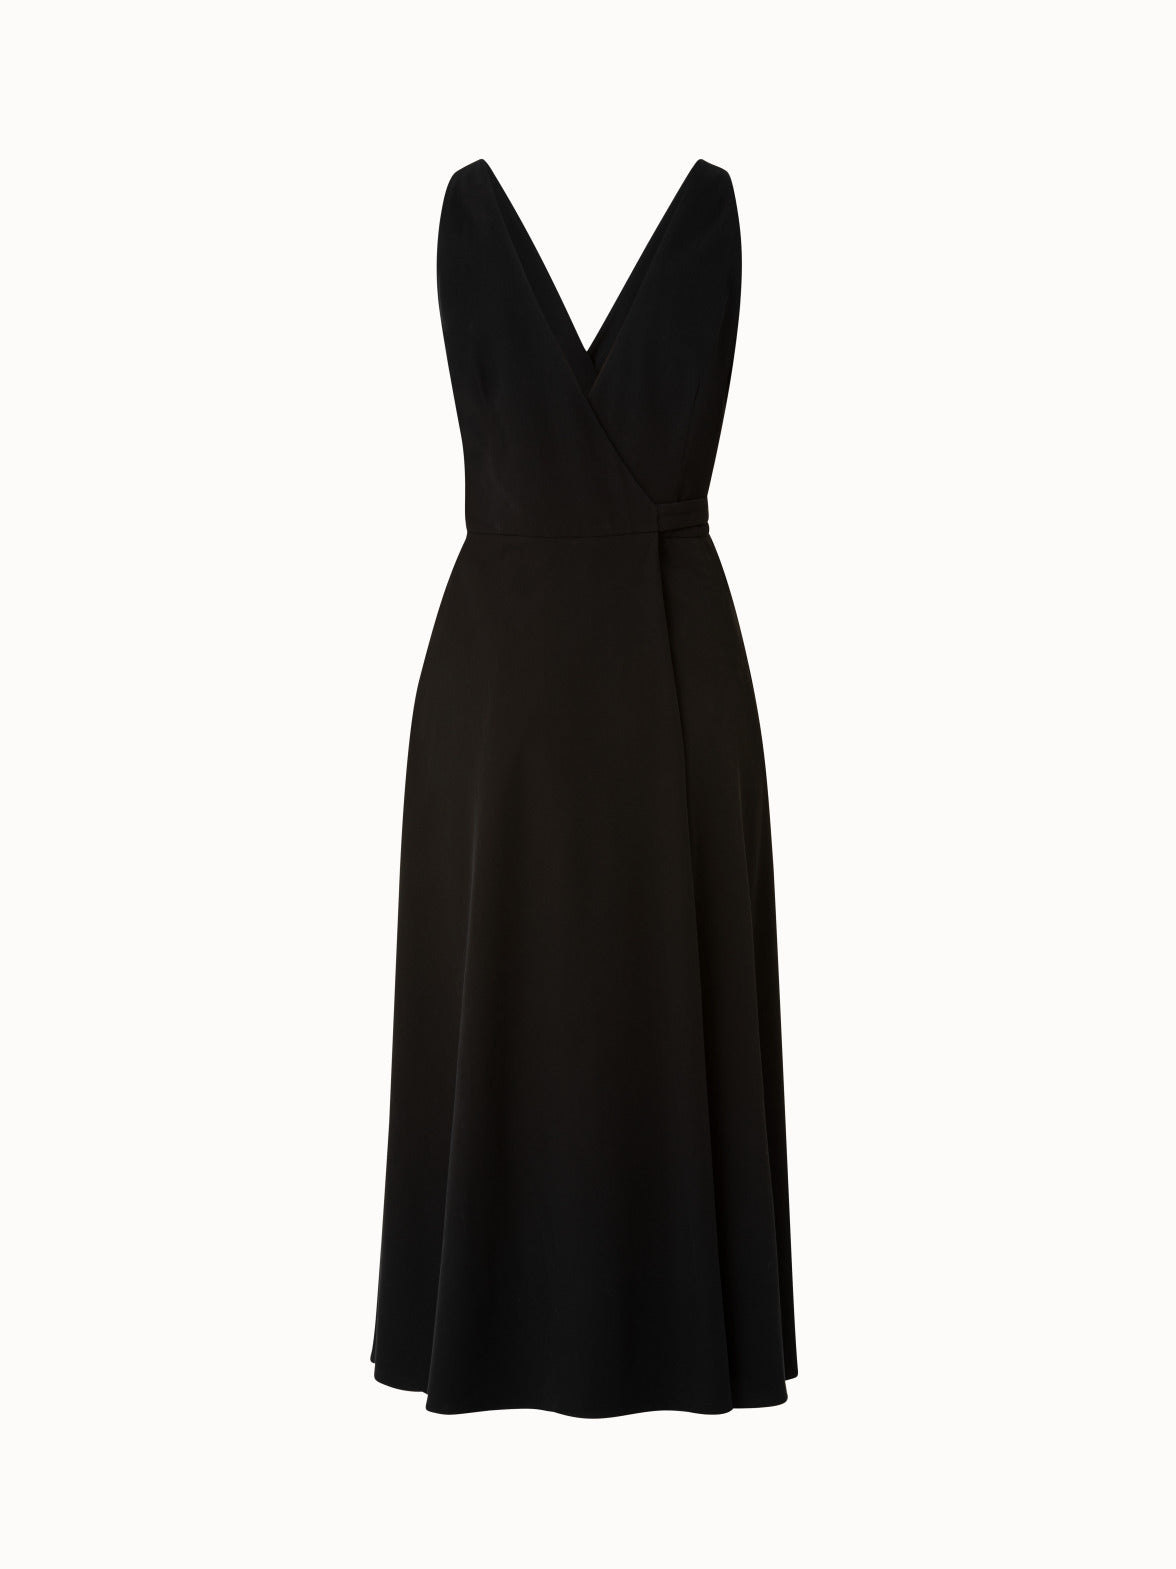 black sleeveless midi dress